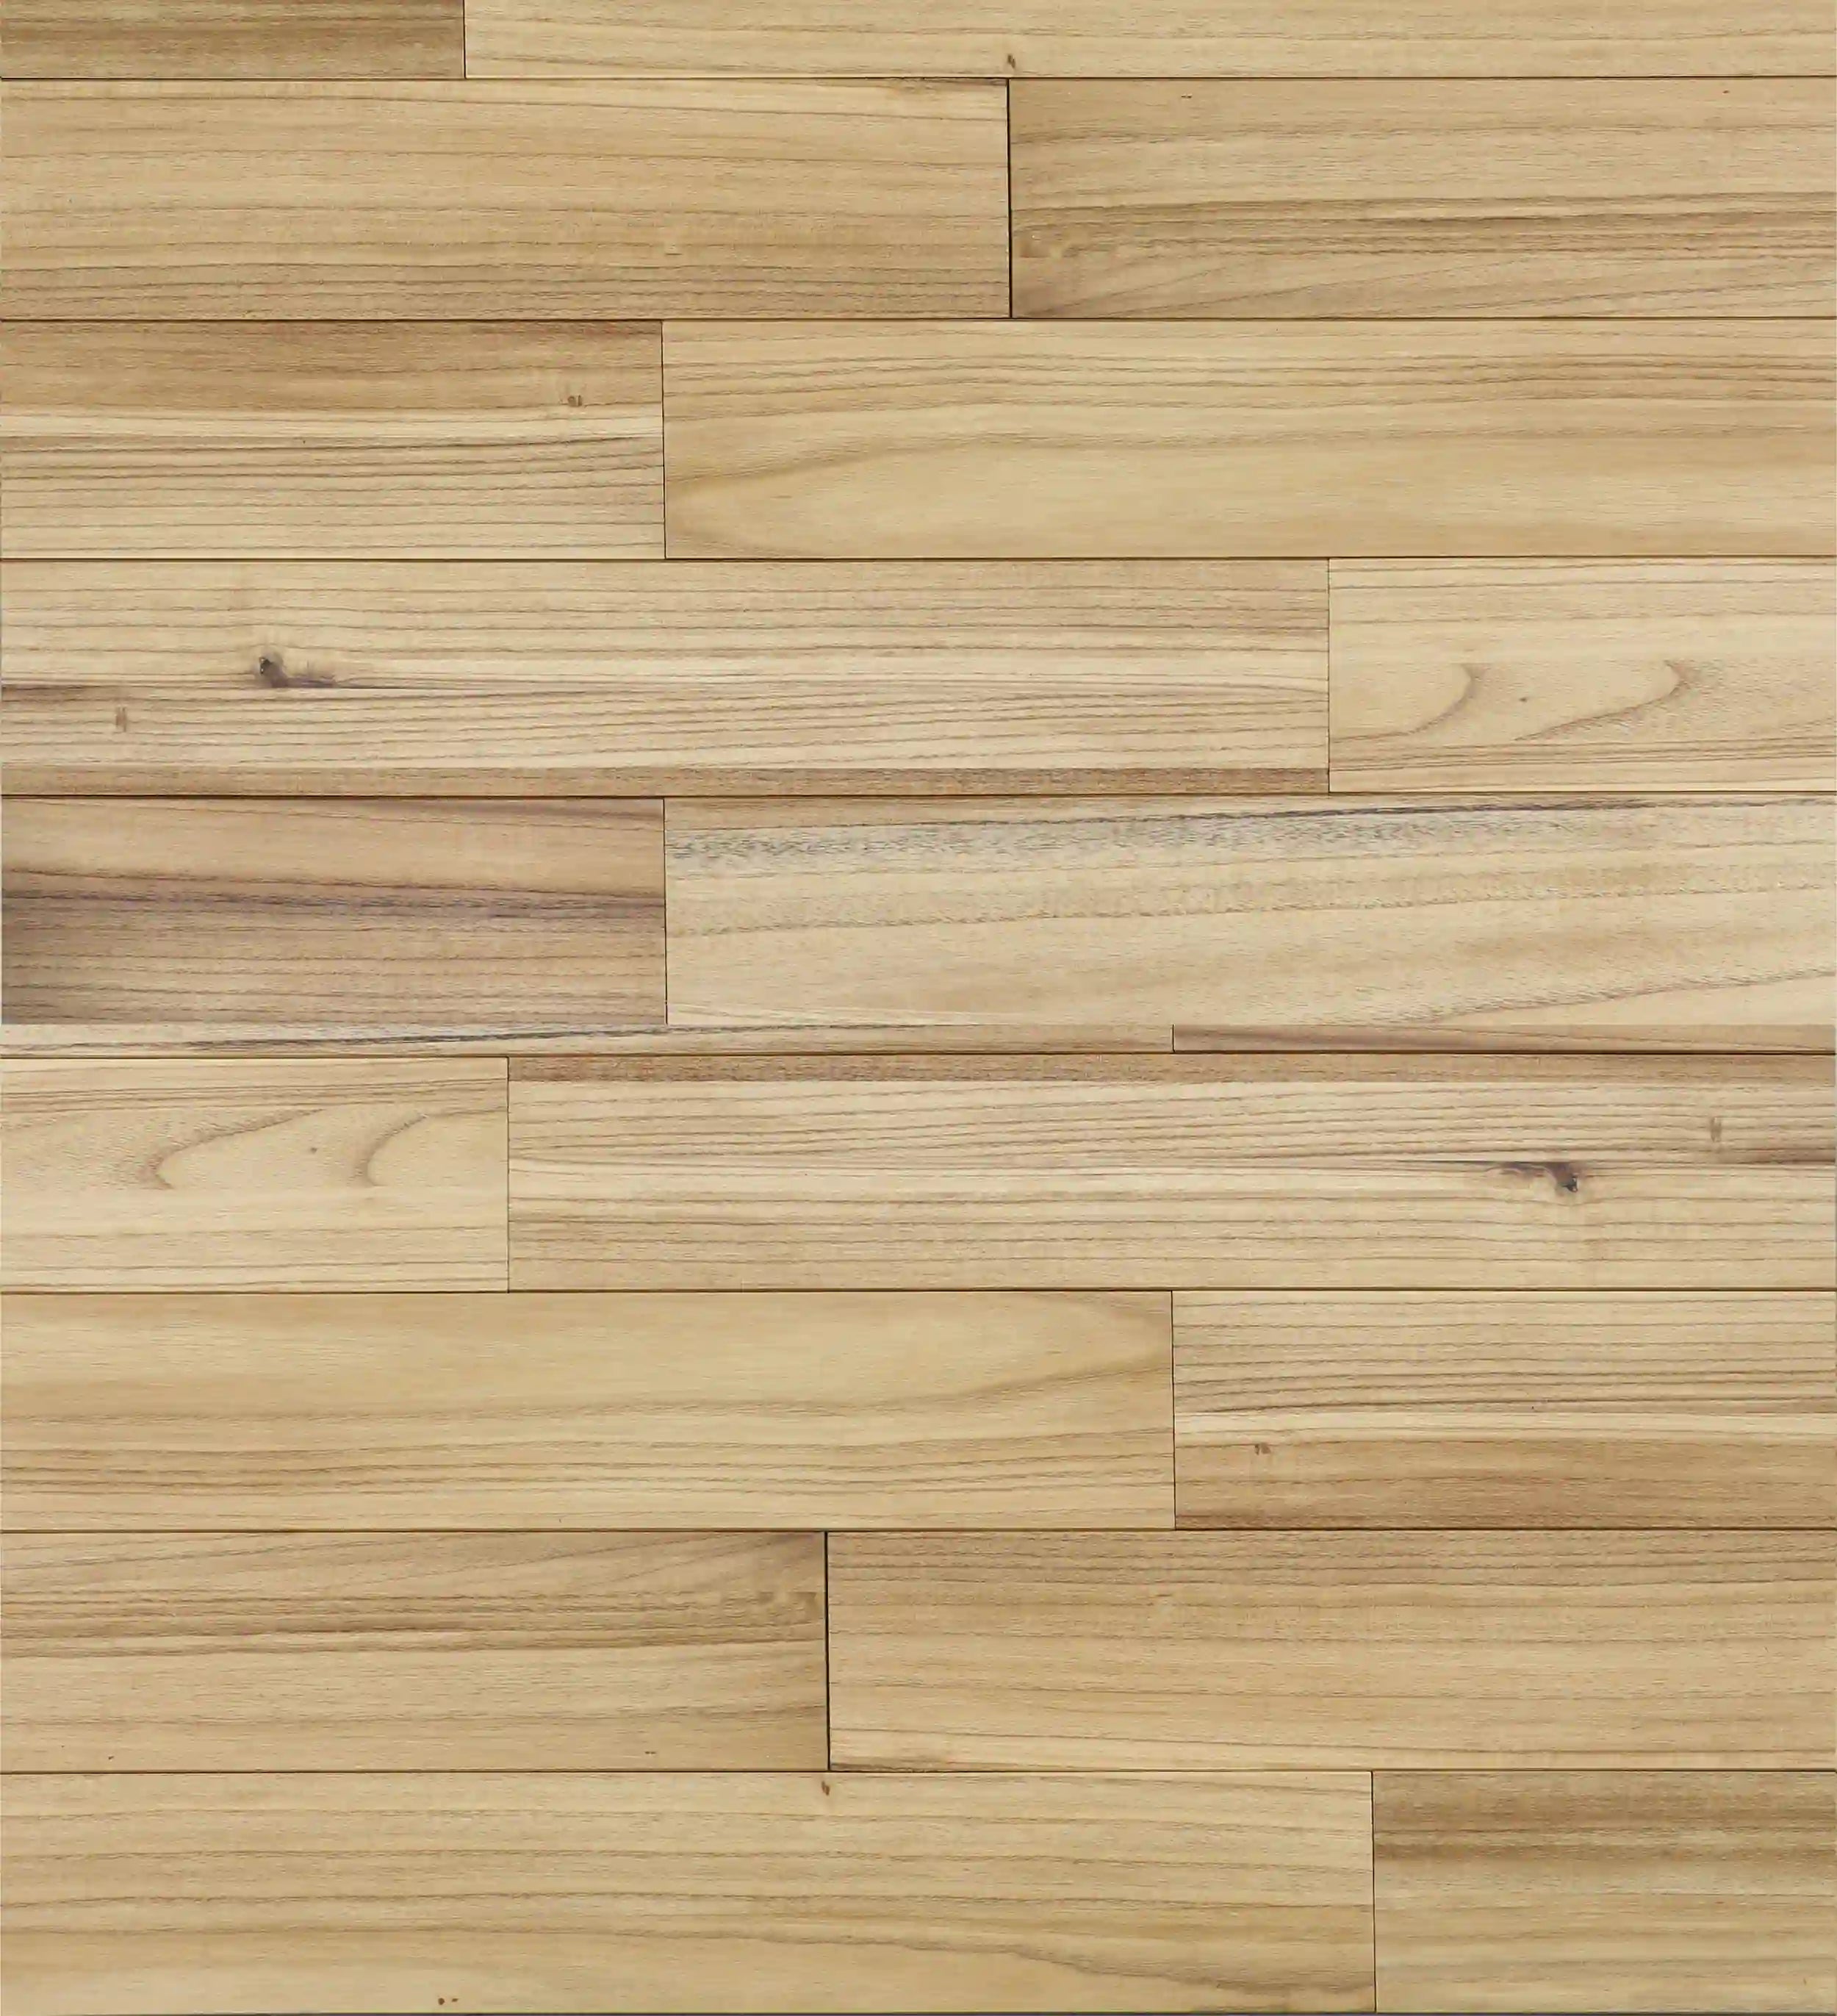 COLAMO Teak Wood Peel and Stick Planks For Wall Paneling Shiplap